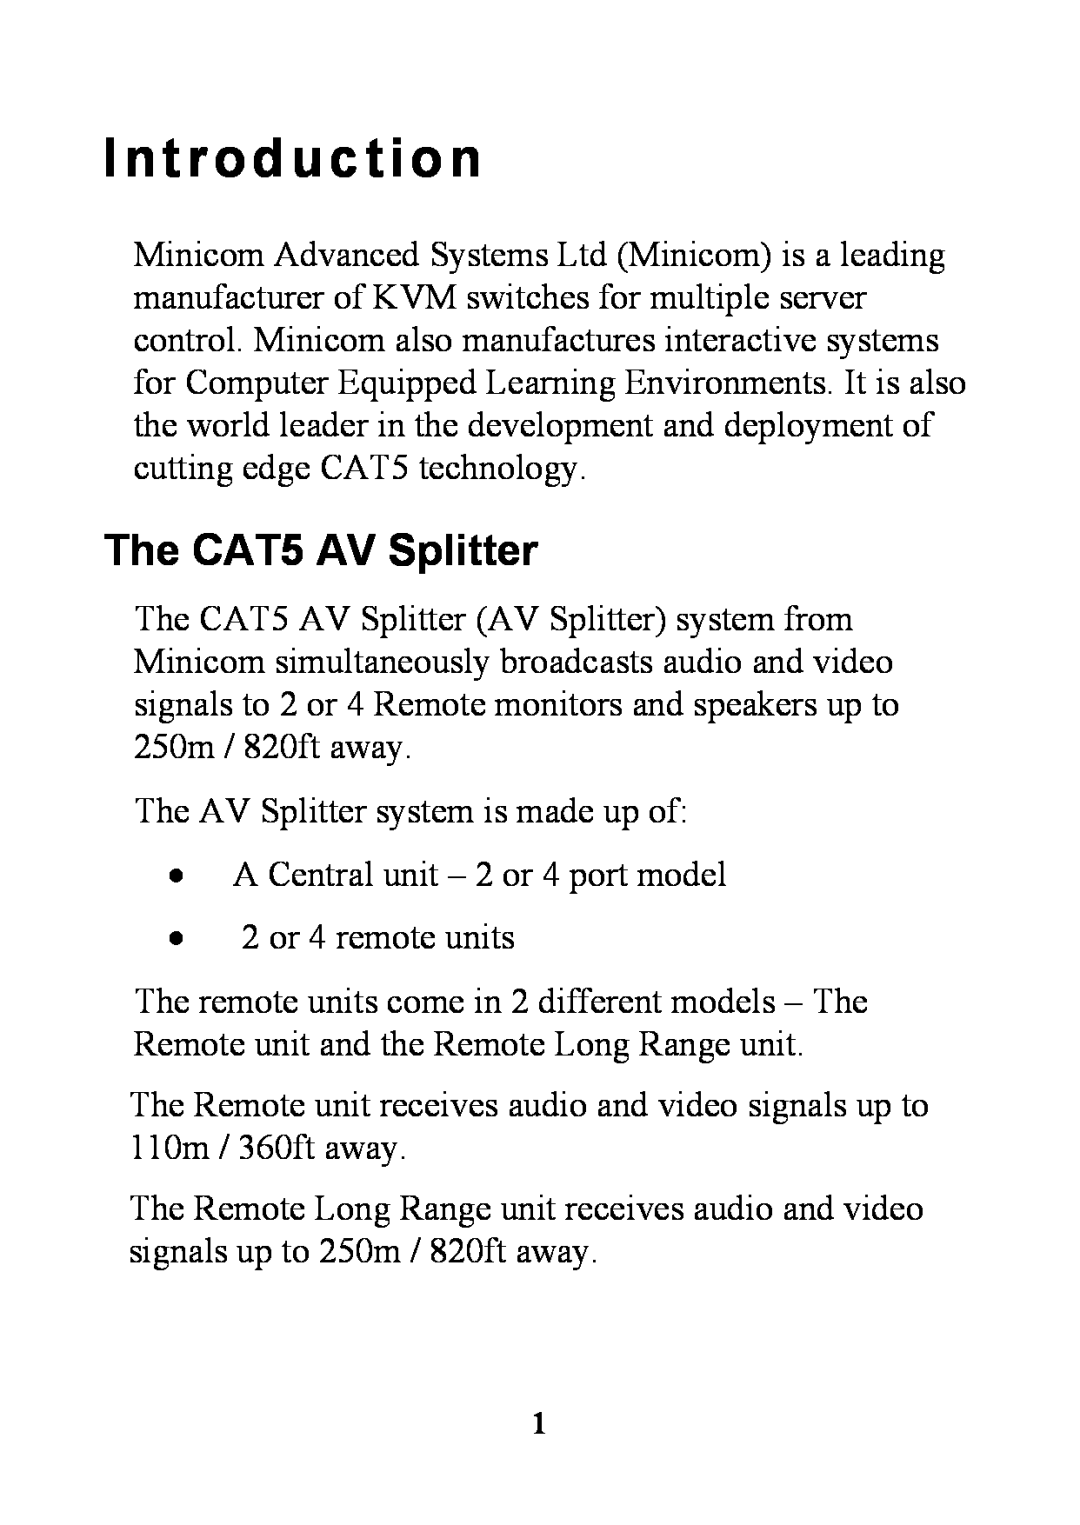 Minicom Advanced Systems 5UM40066 - V1 8/01 manual Introduction, The CAT5 AV Splitter 